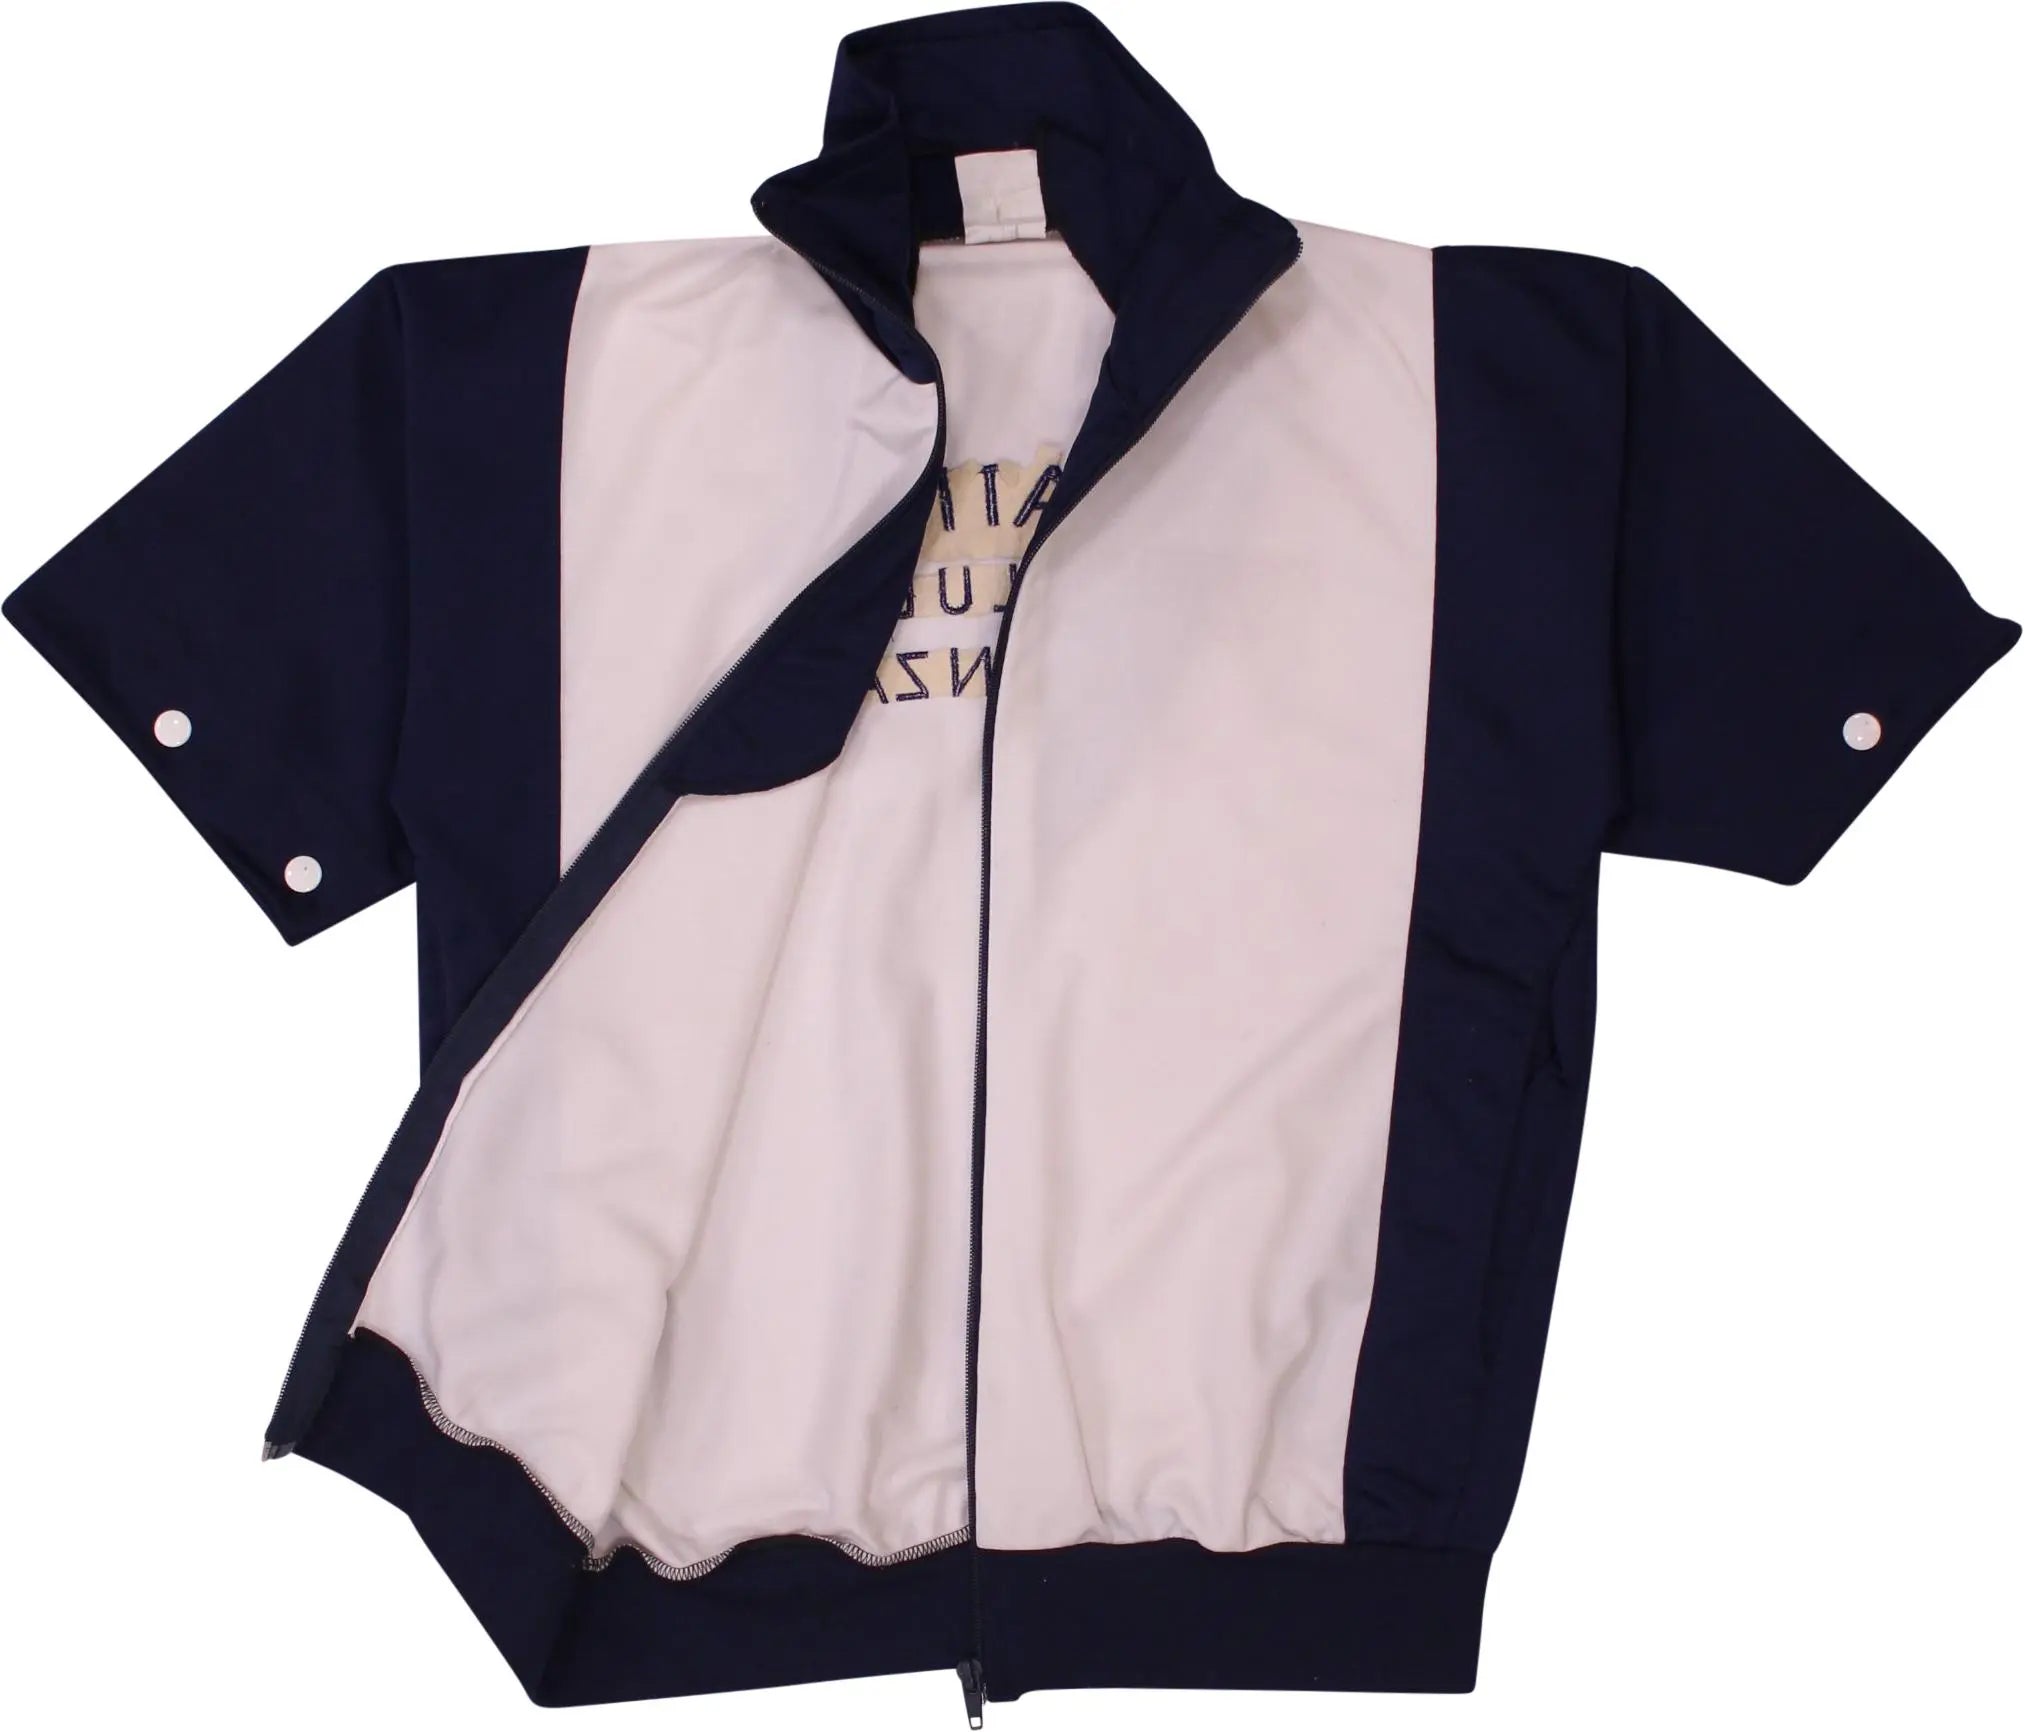 Mili Sport - Sport Jacket- ThriftTale.com - Vintage and second handclothing